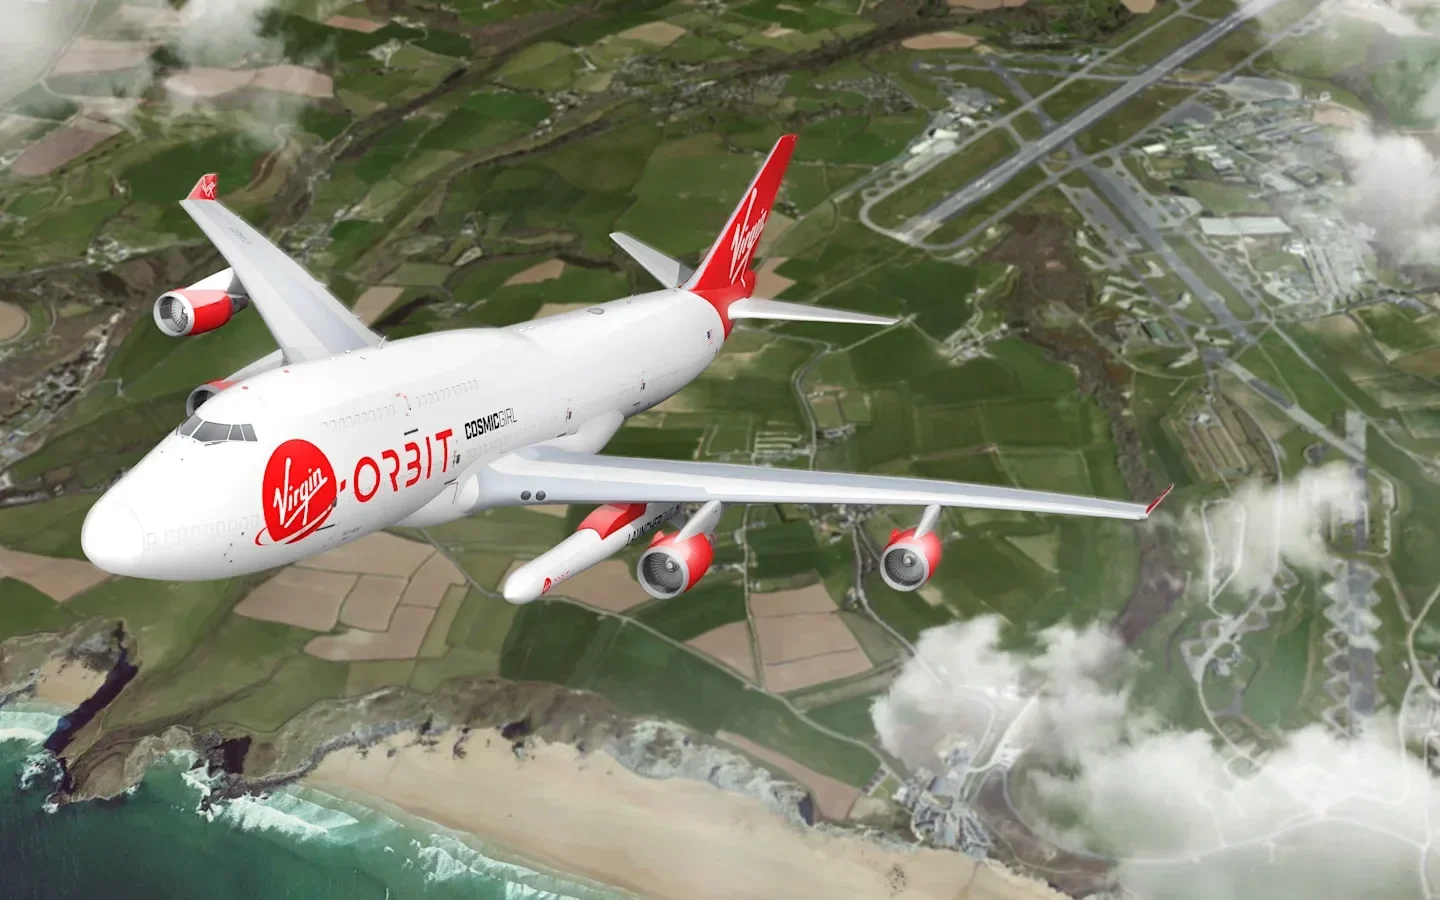 Virgin Orbit's orbital launch subsidiary flying over Cornwall